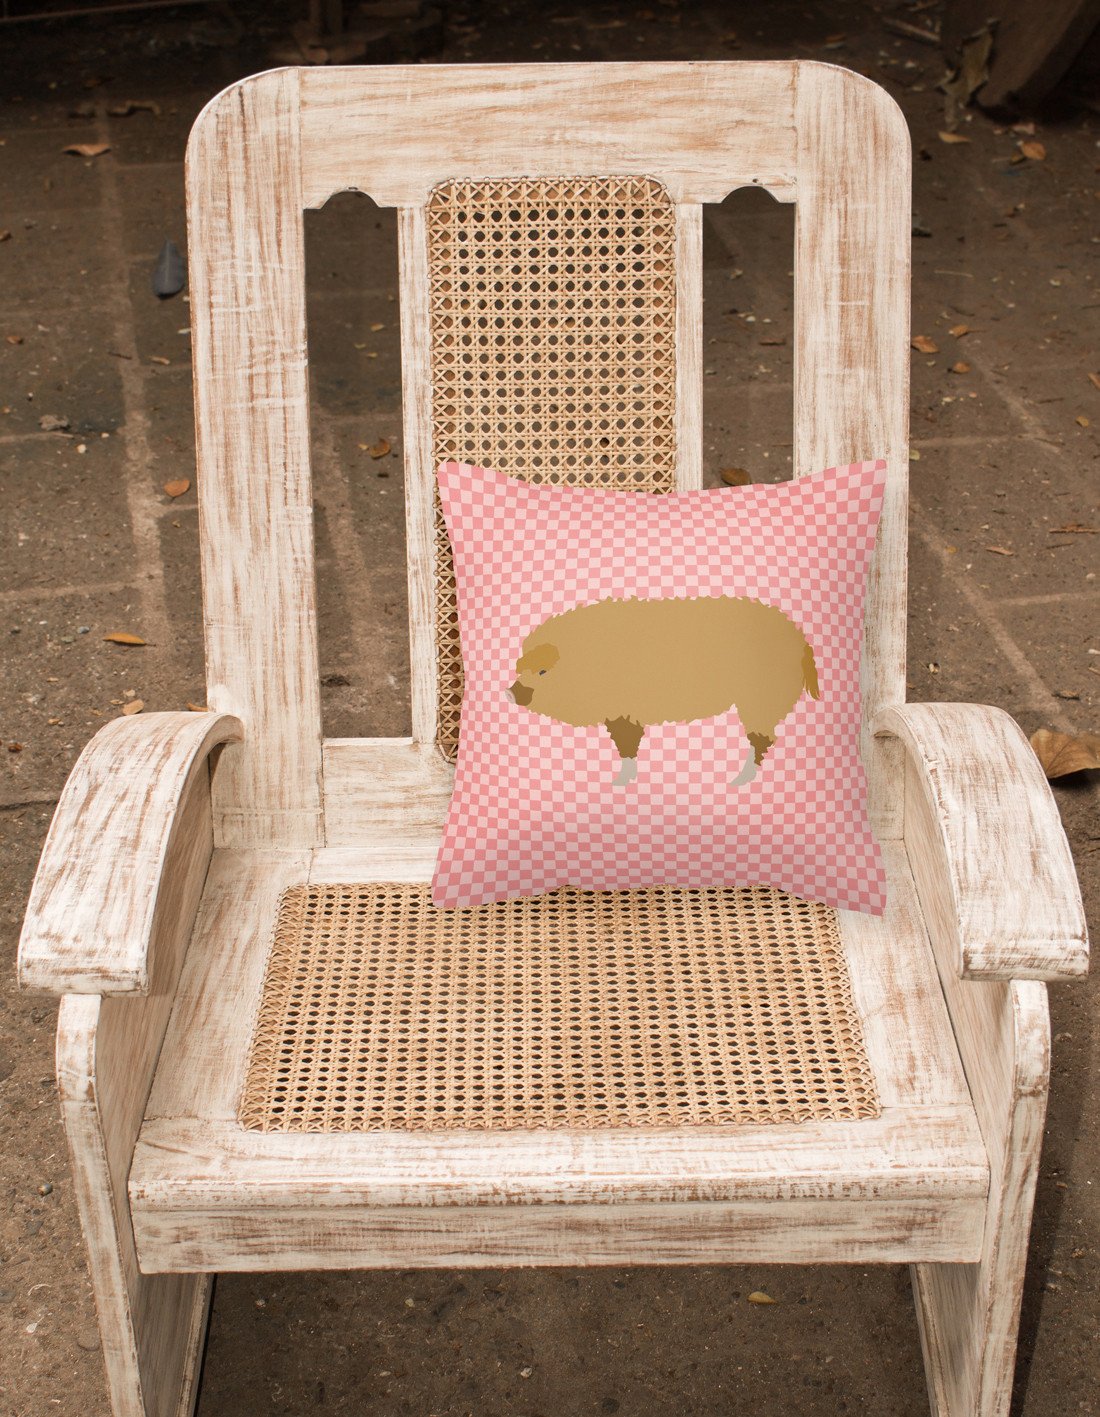 Hungarian Mangalica Pig Pink Check Fabric Decorative Pillow BB7934PW1818 by Caroline's Treasures